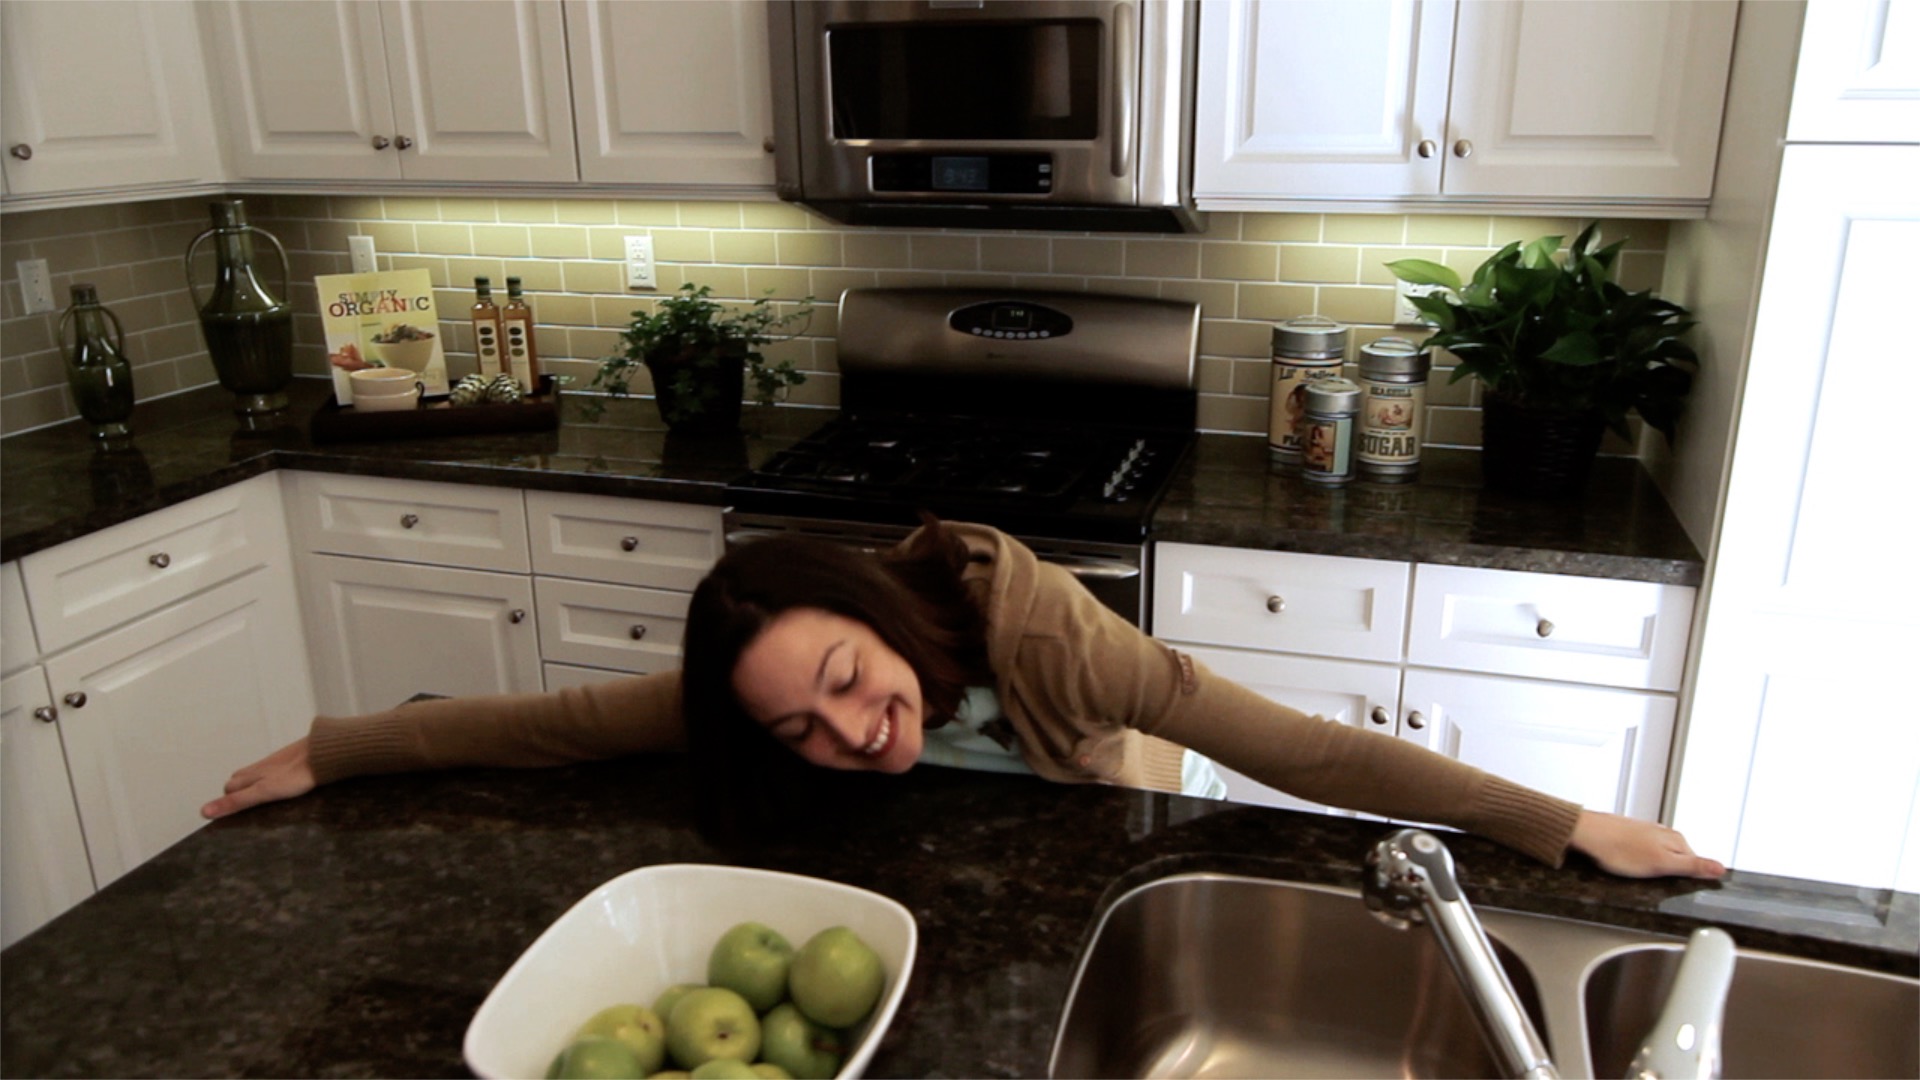 a woman hugging a kitchen countertop